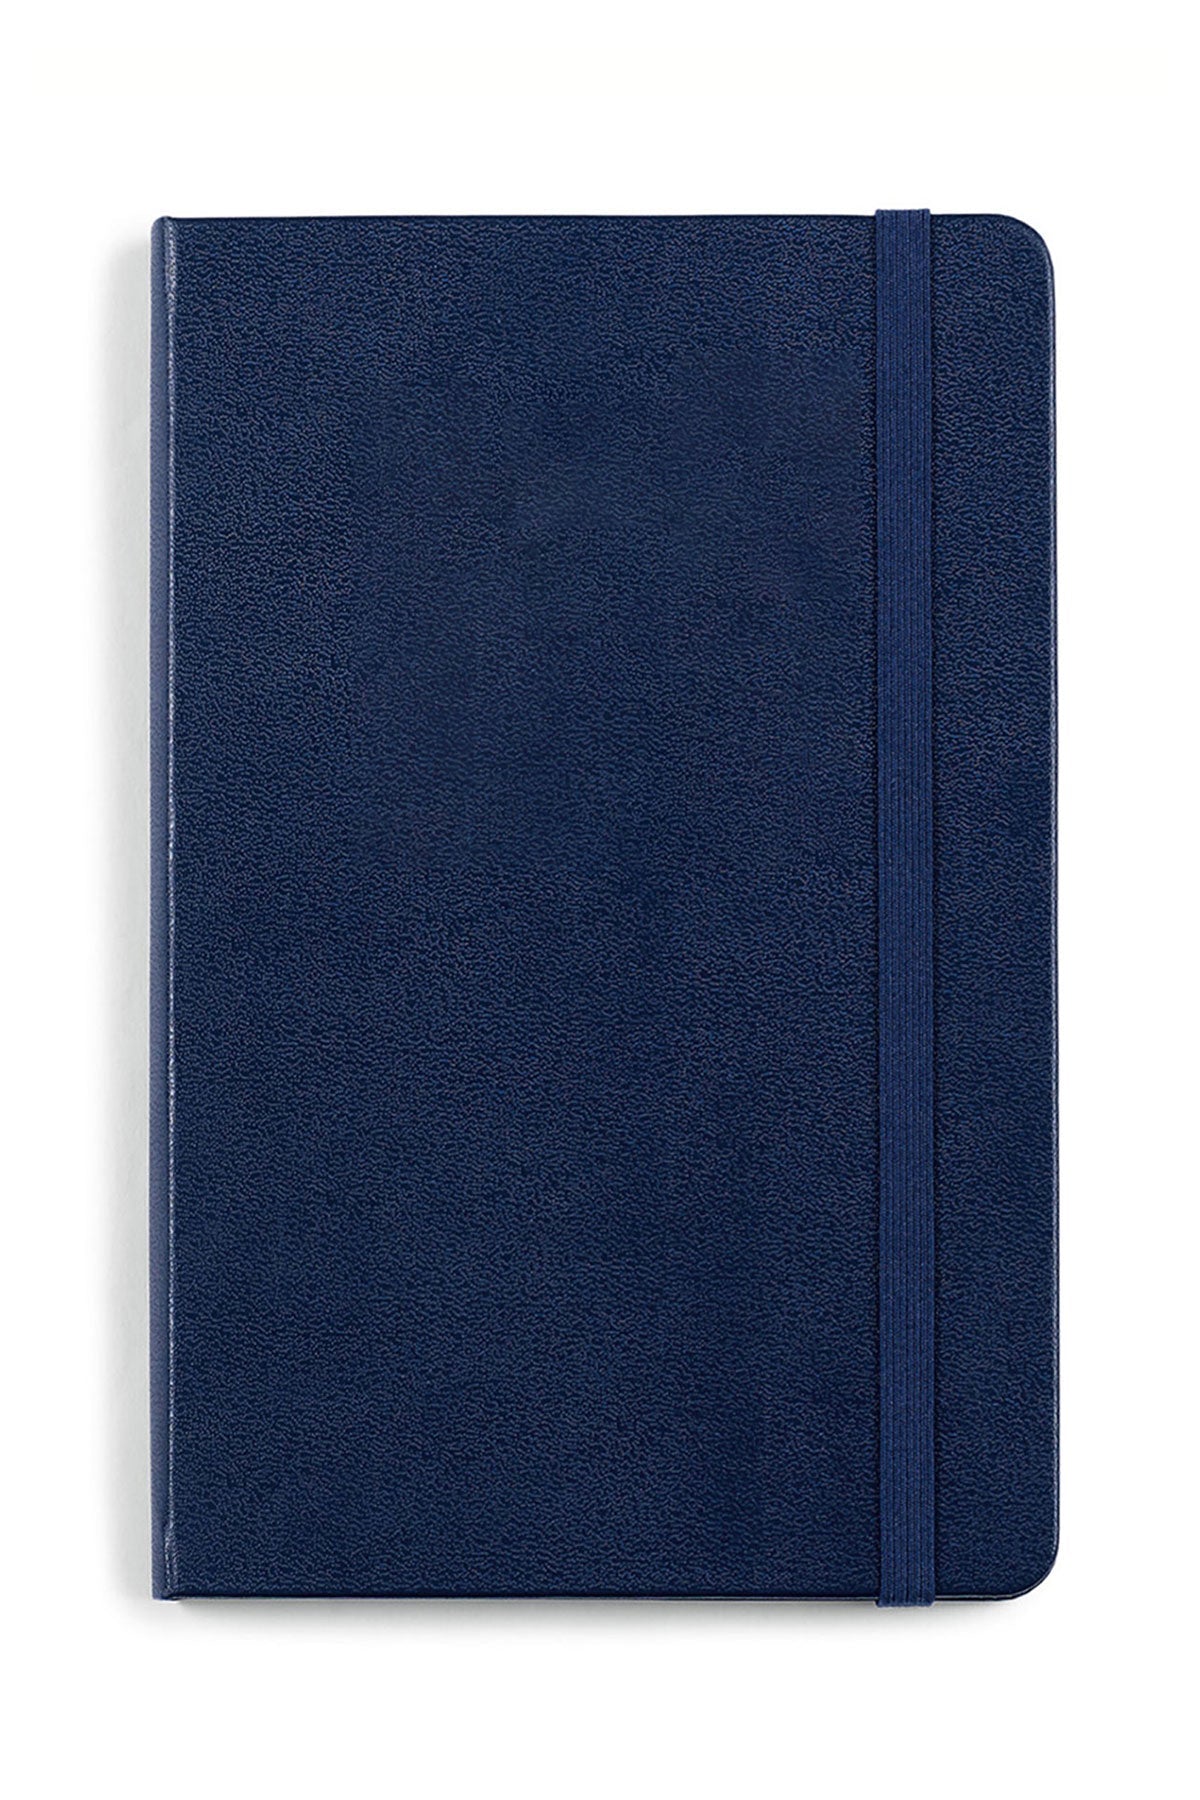 Moleskine Notebook Navy Blue [Coinbase]